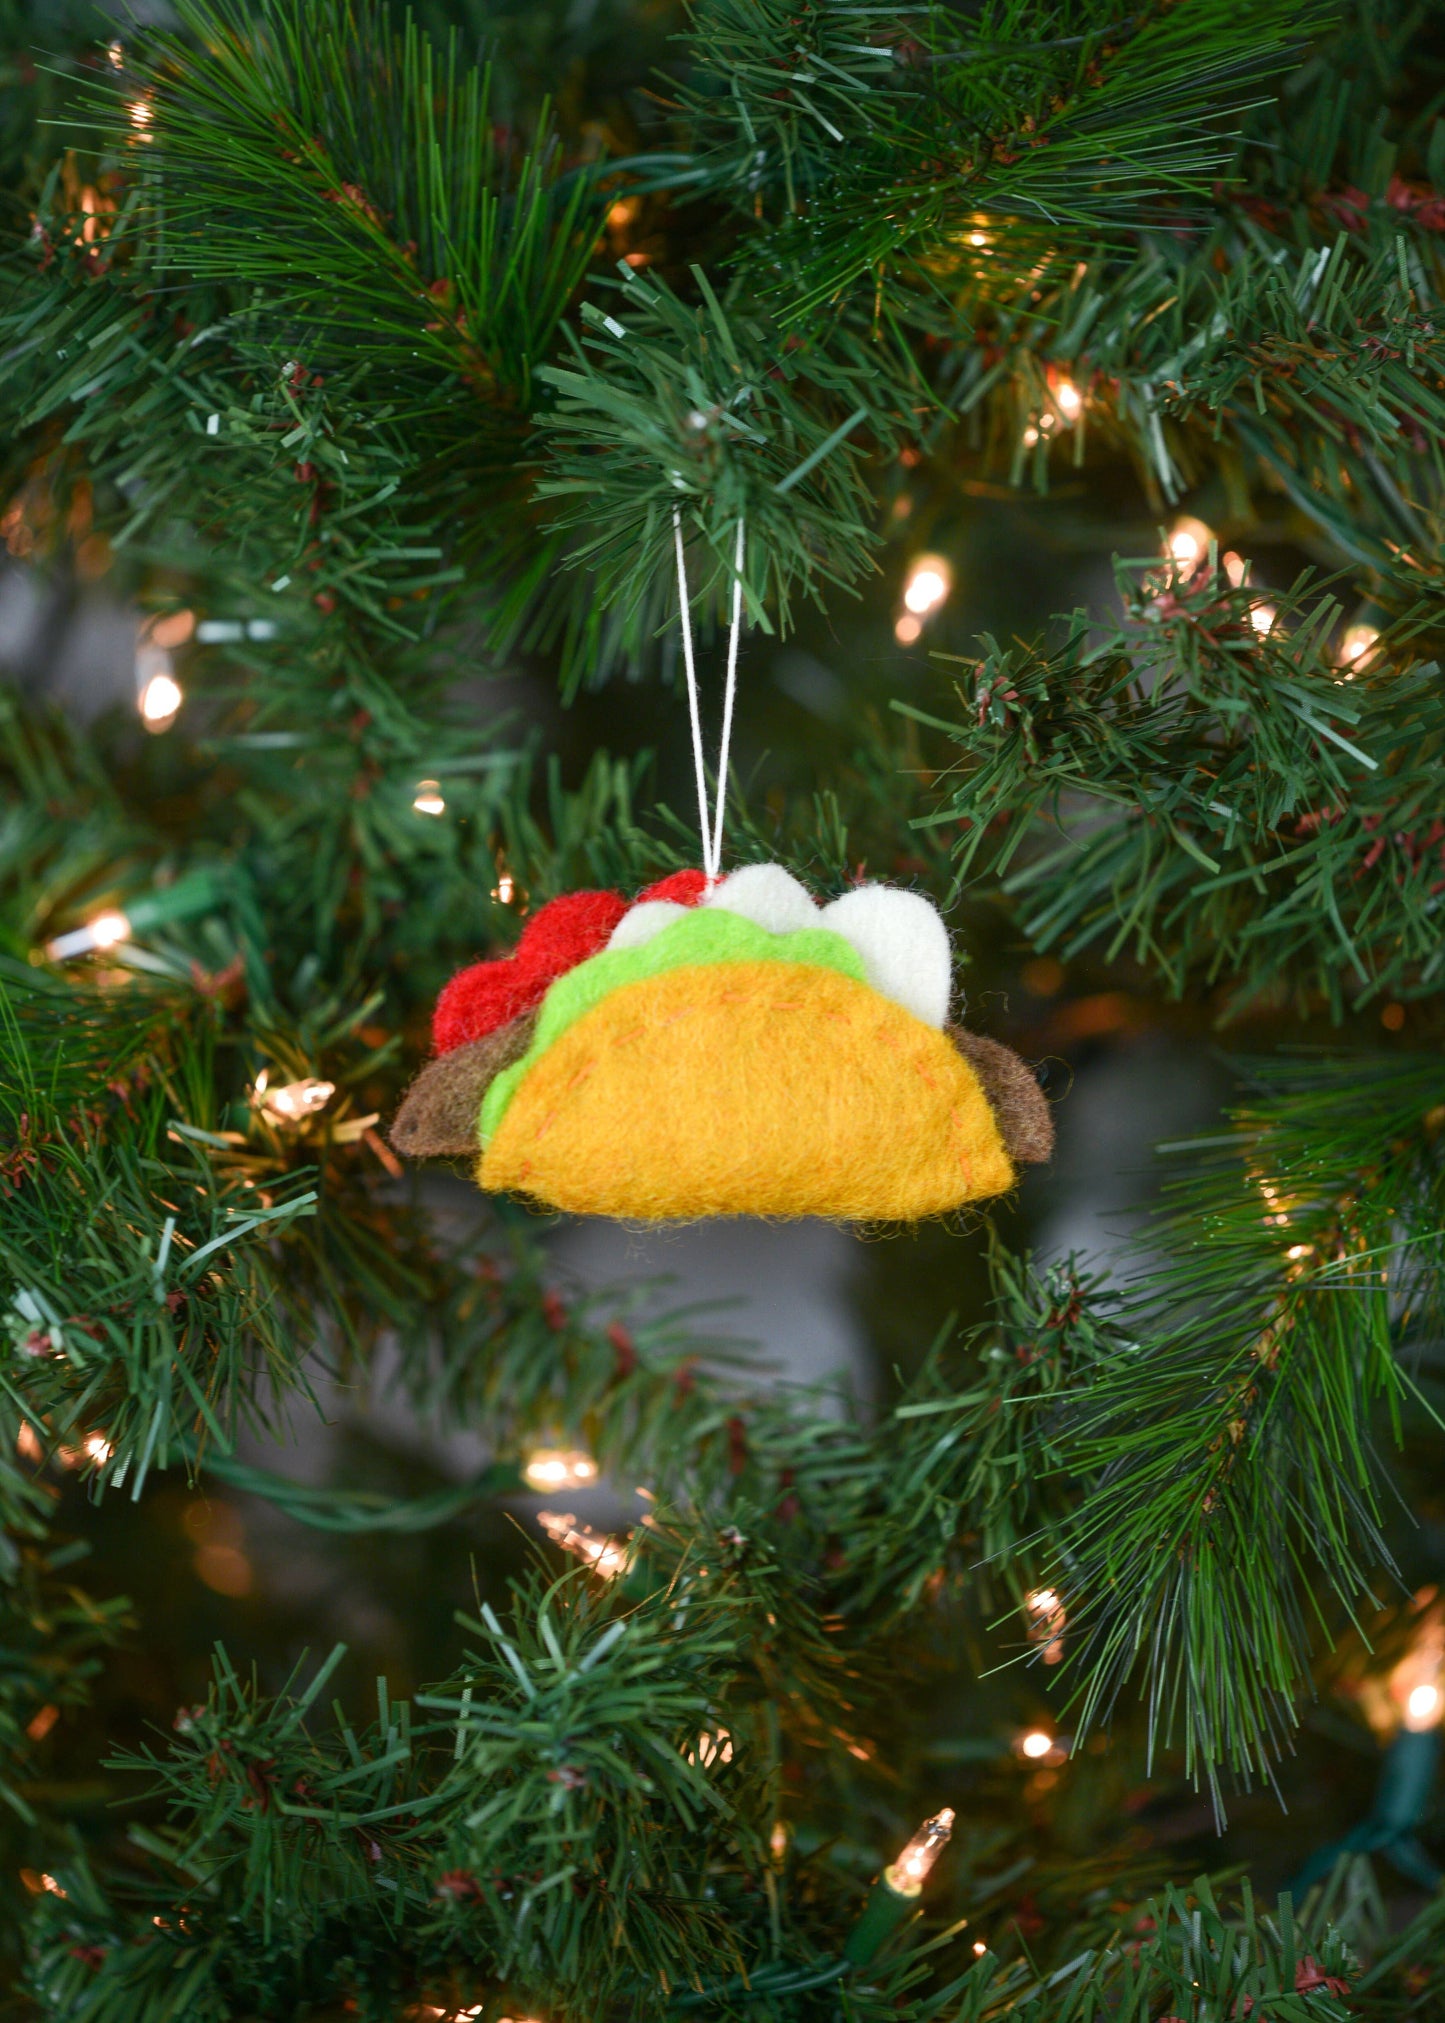 Handmade Taco Felt Ornament